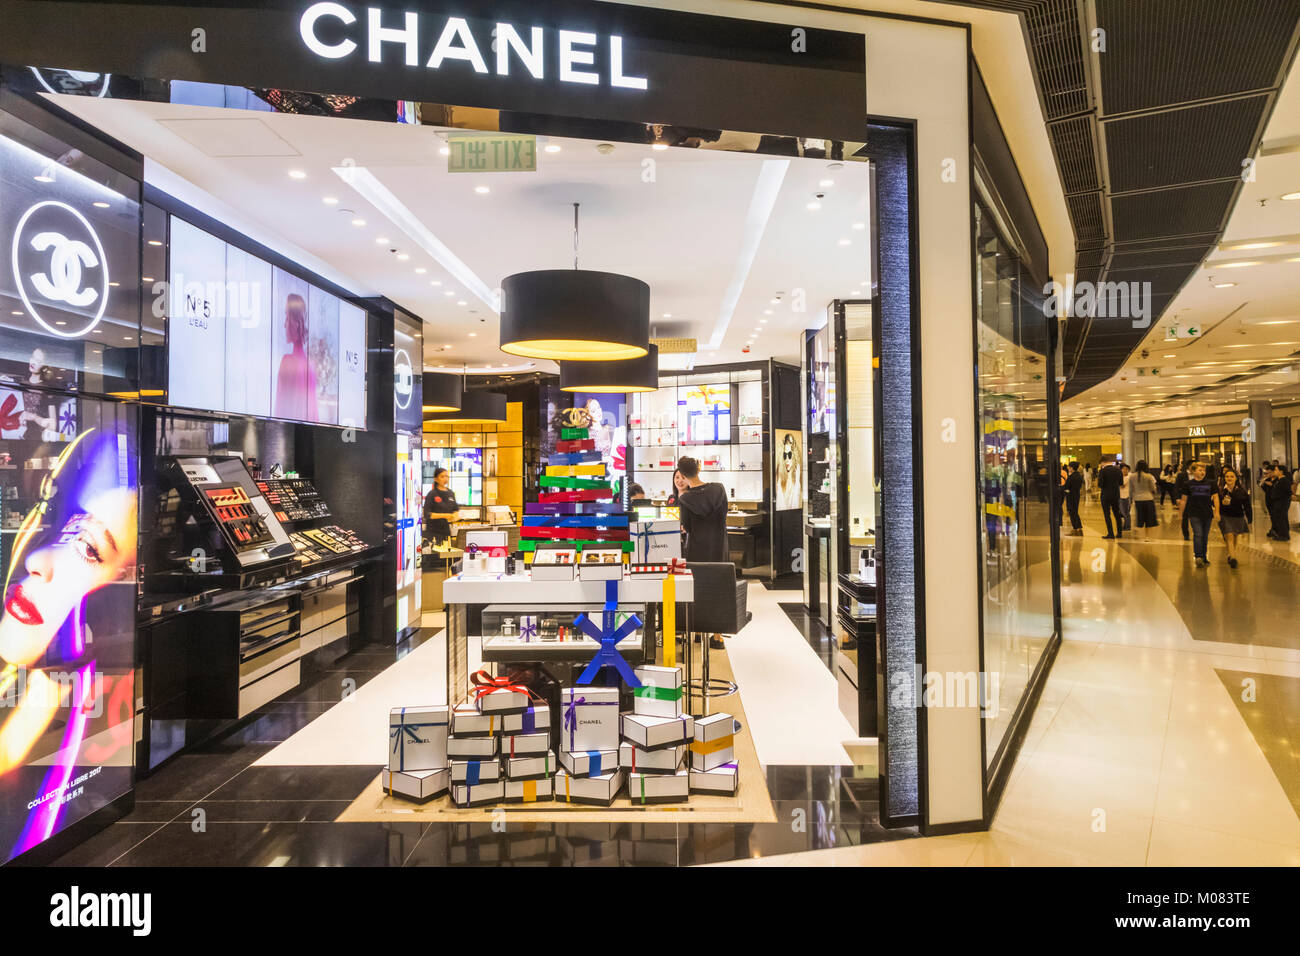 China, Hong Kong, Central, IFC (International Finance Centre), Shopping  Mall, Chanel Store Stock Photo - Alamy